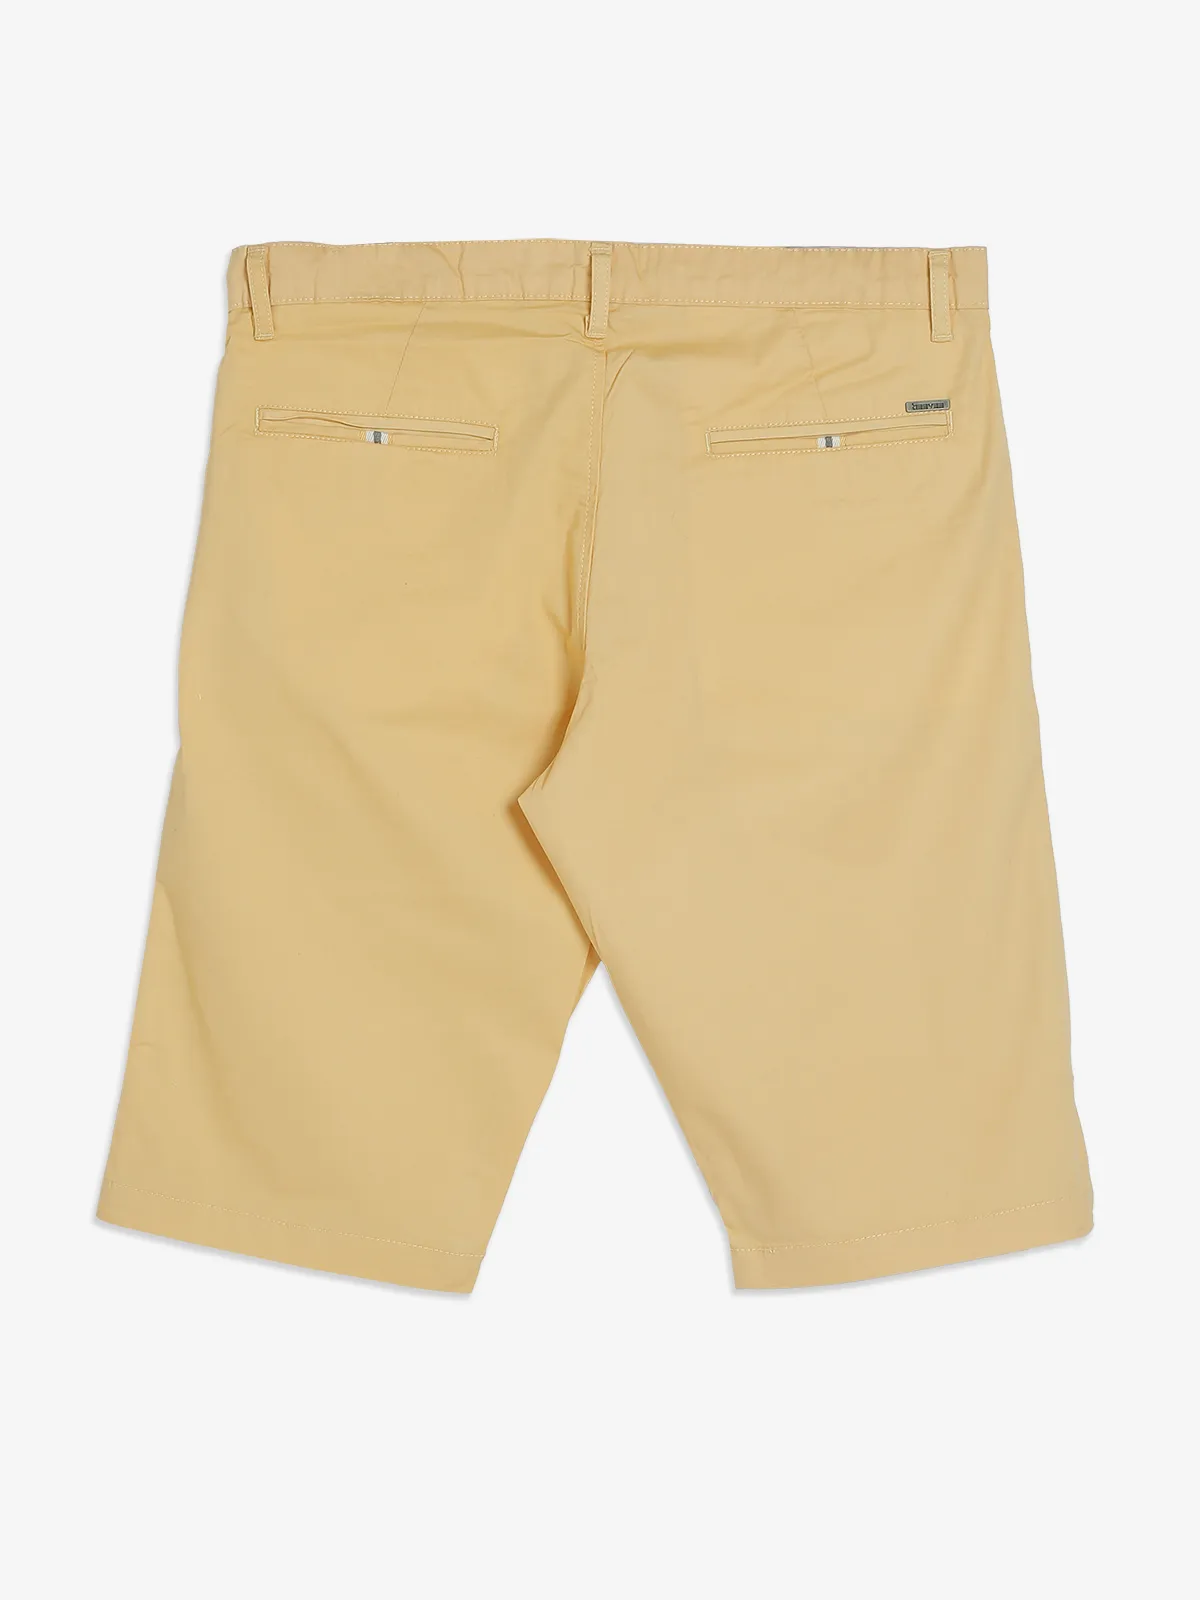 BEEVEE yellow solid shorts